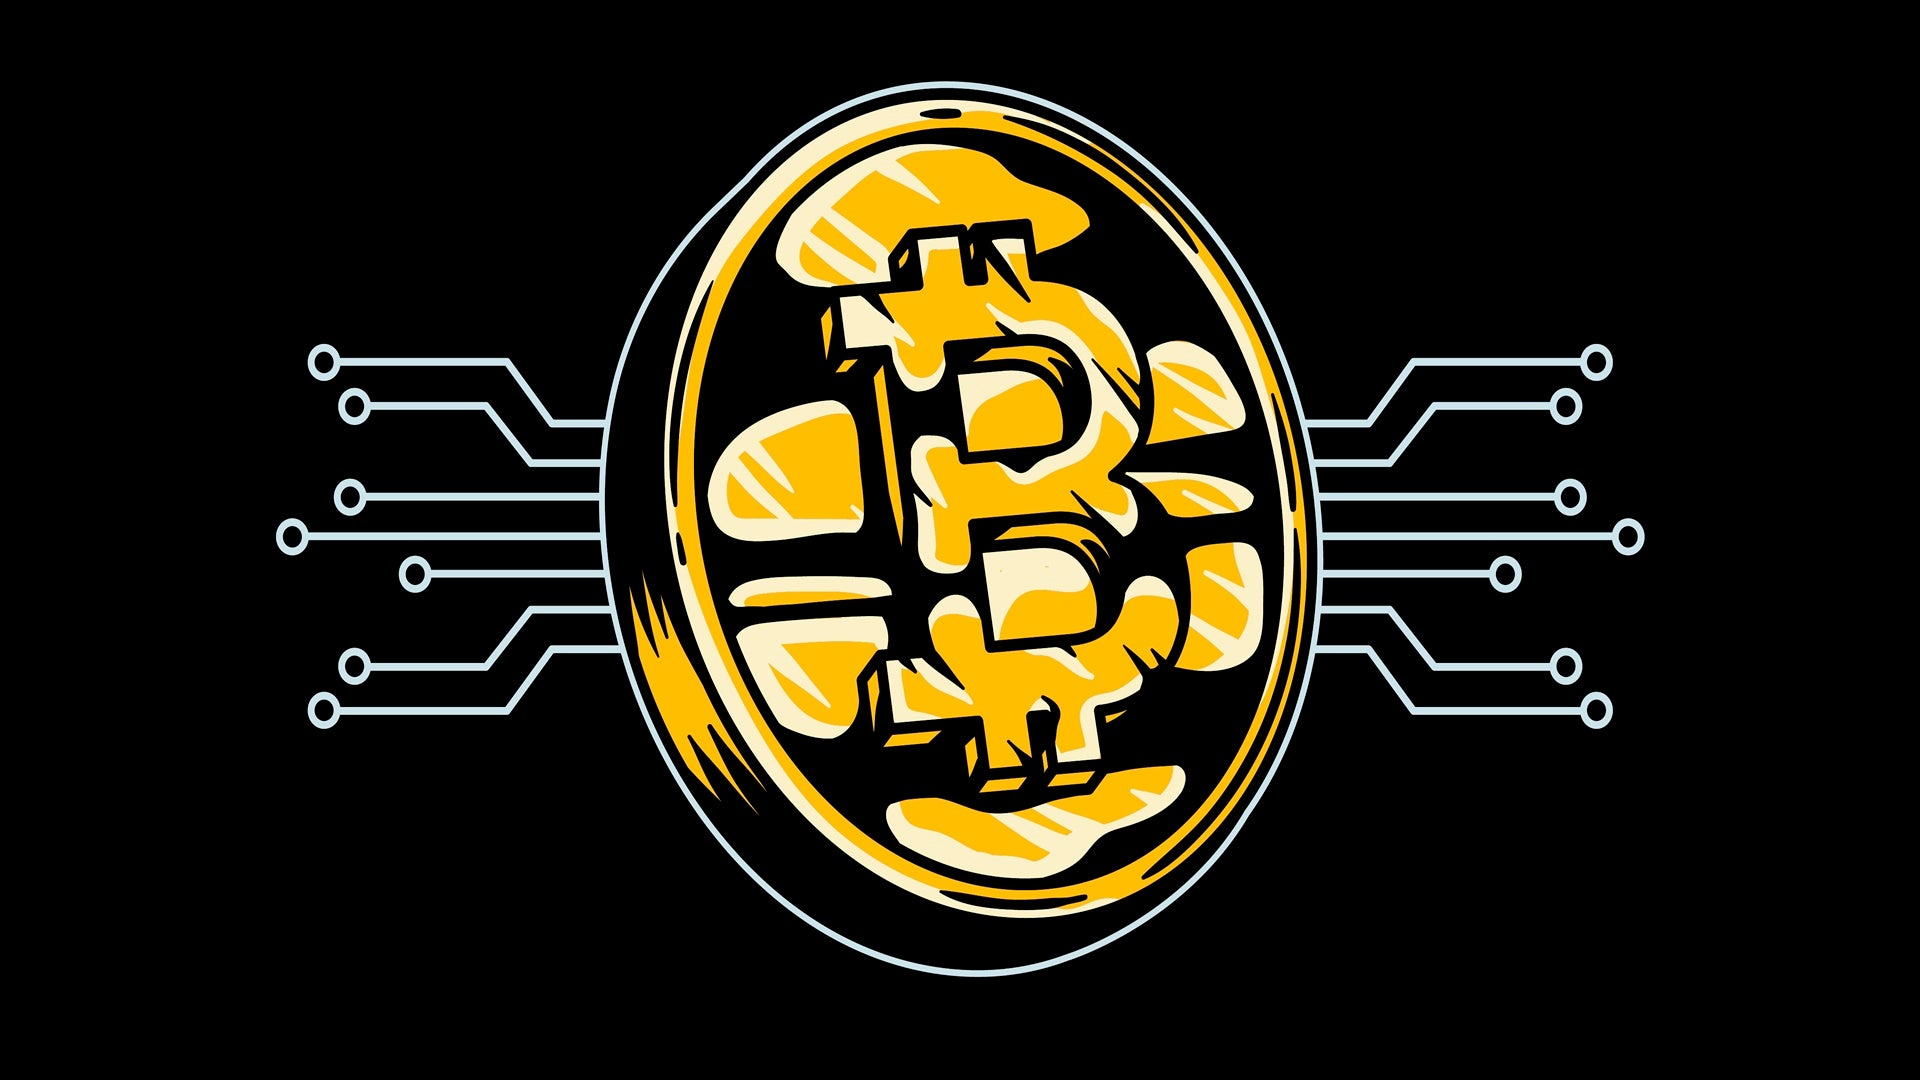 Hand drawn bitcoin icon illustration